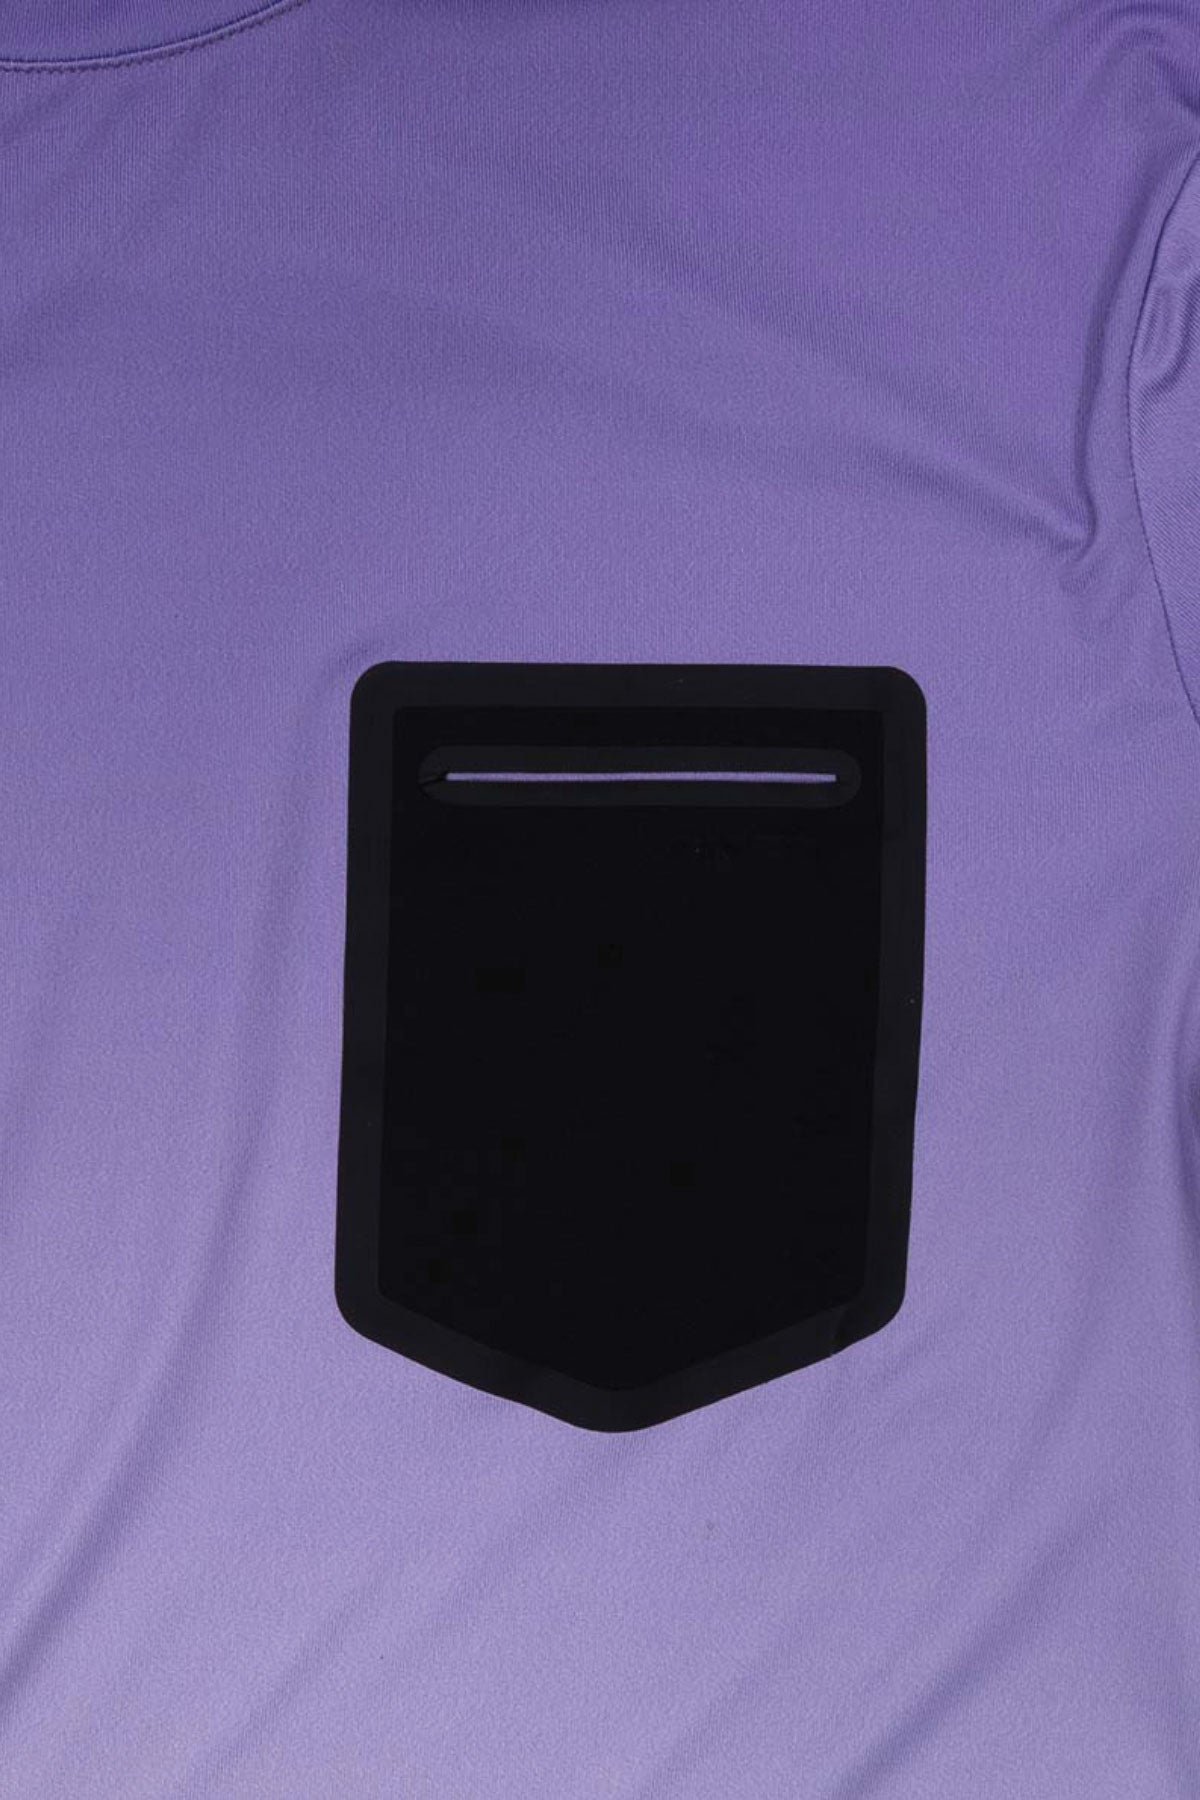 Ahoy Long and Short Sleeve Together Fishing Shirt -Purple - Stafu Pro Series